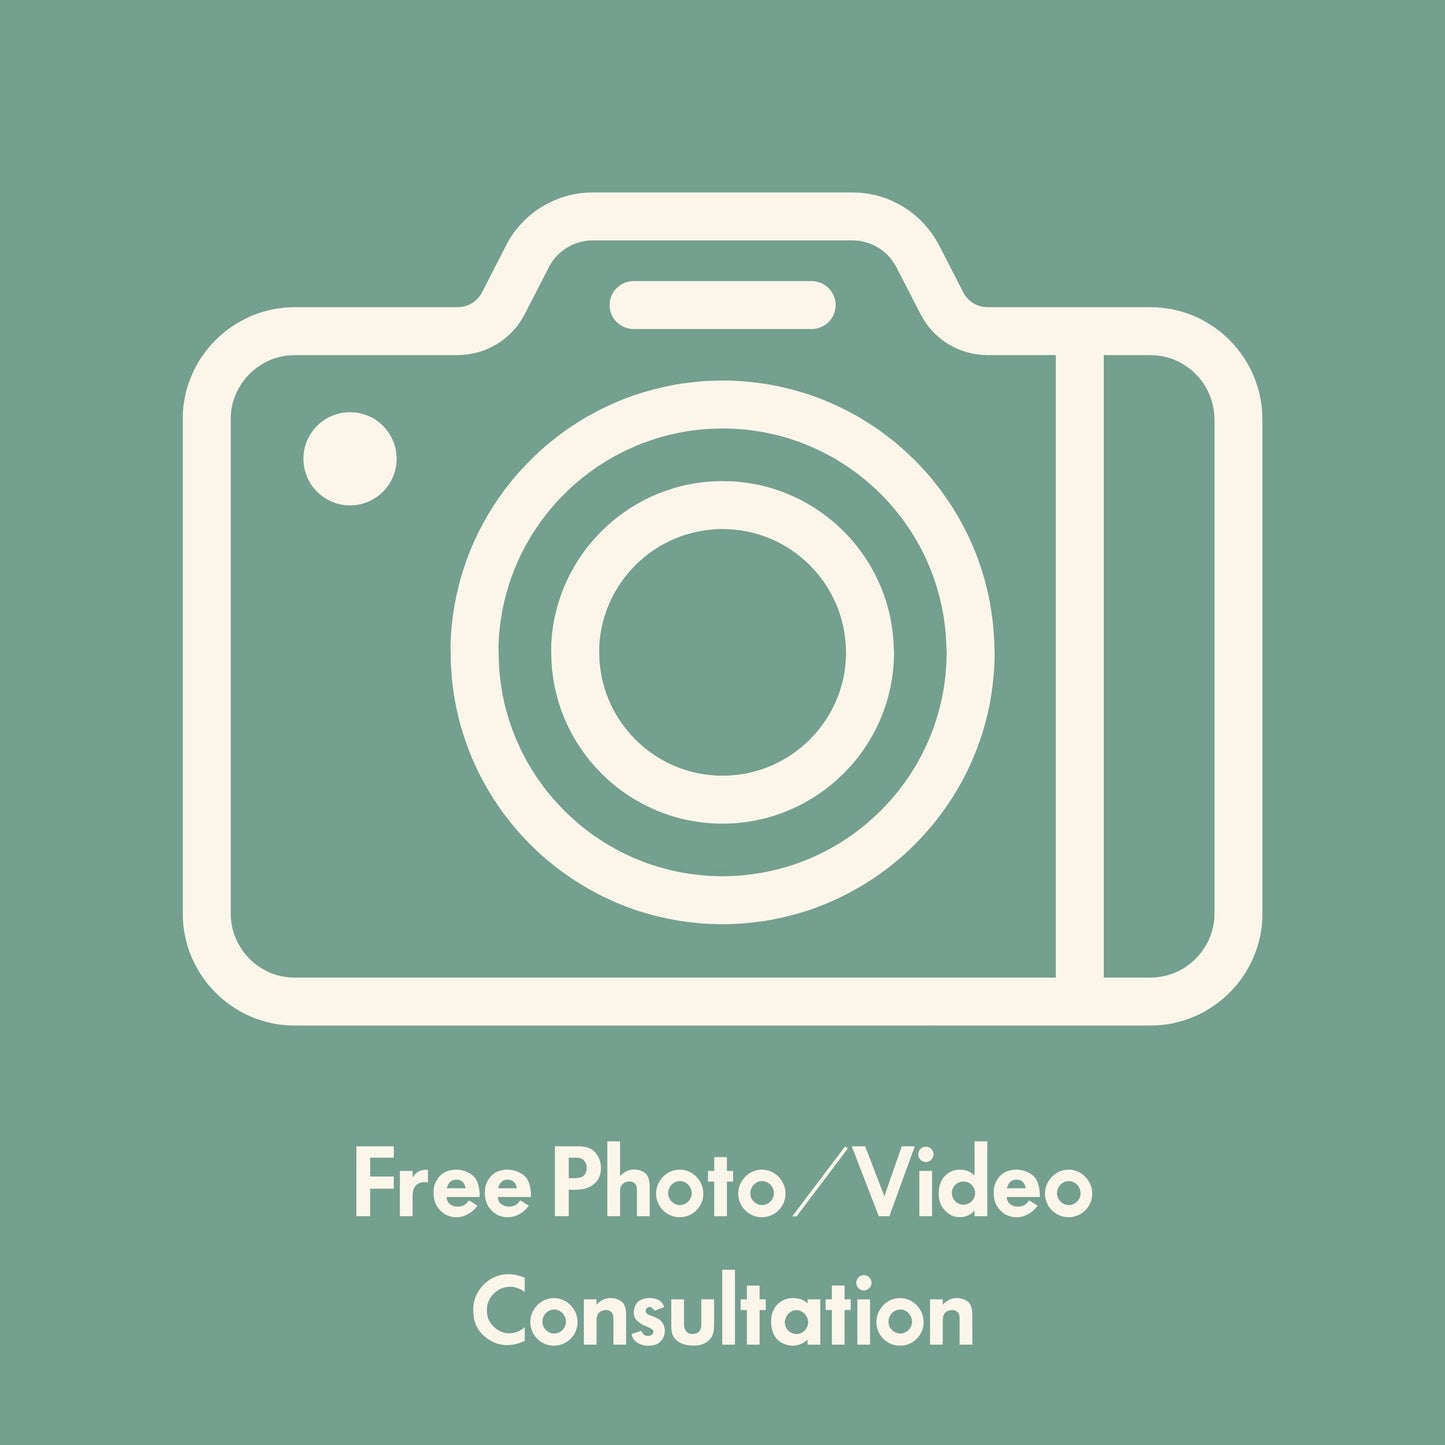 Free Photo/Video Consultation